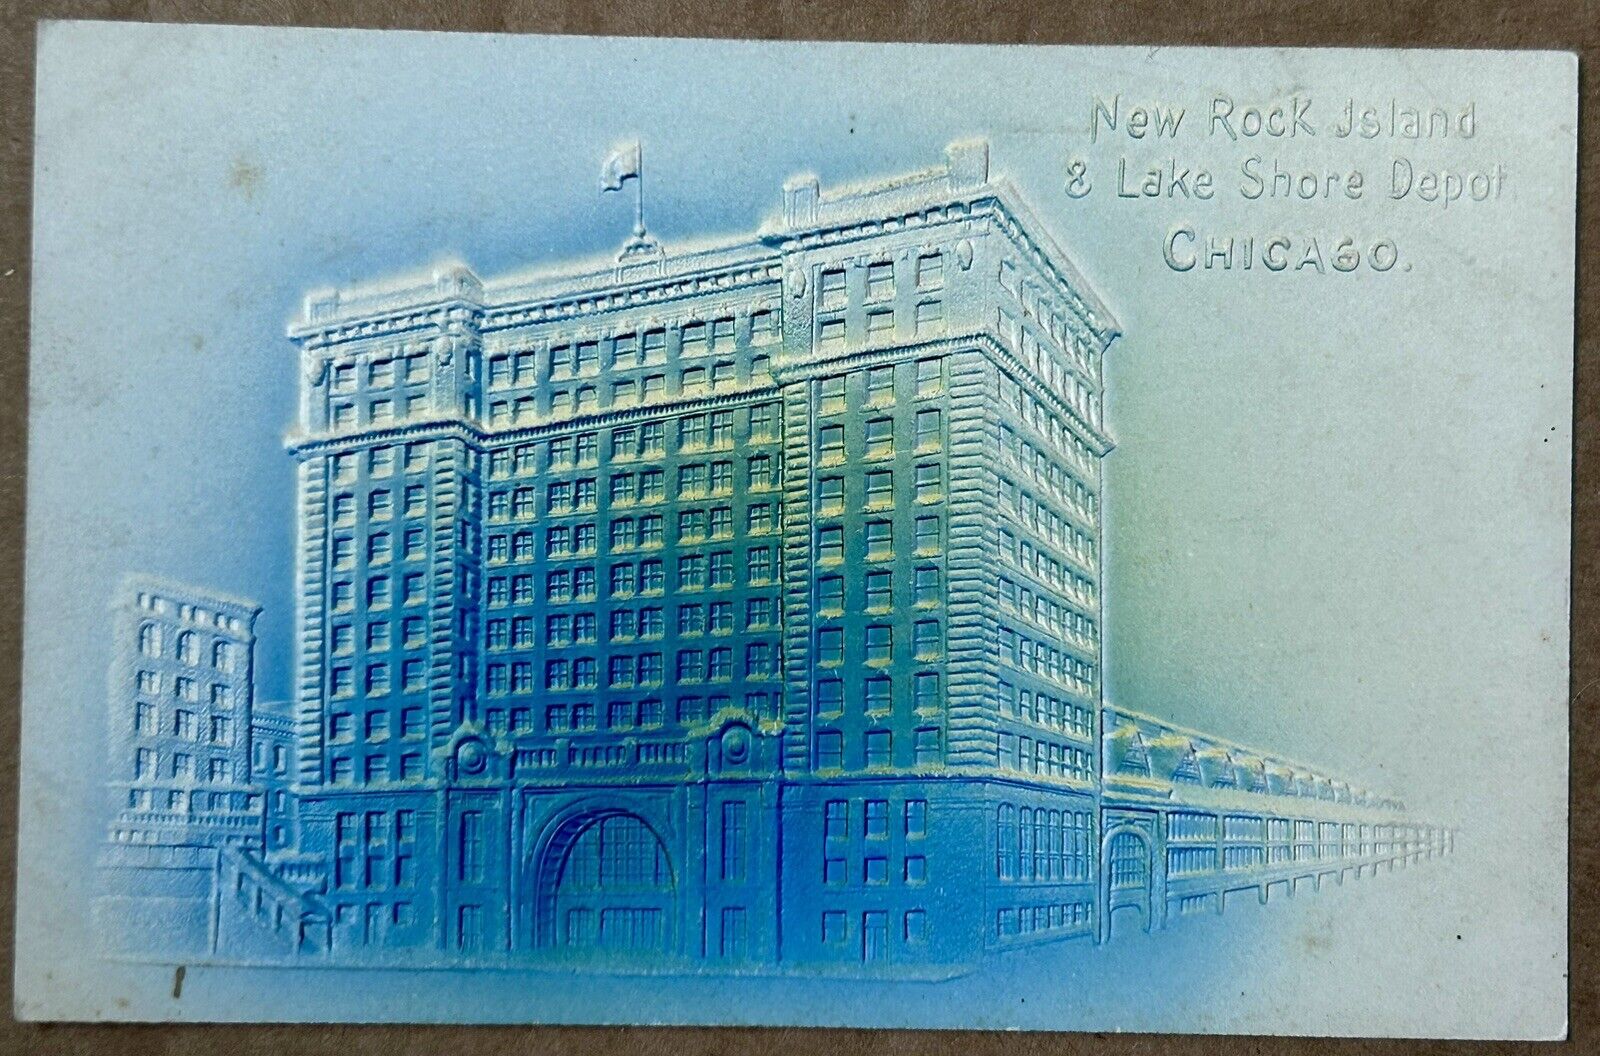 New Rock Island And Lake Shore Depot. Chicago Illinois Vintage Postcard